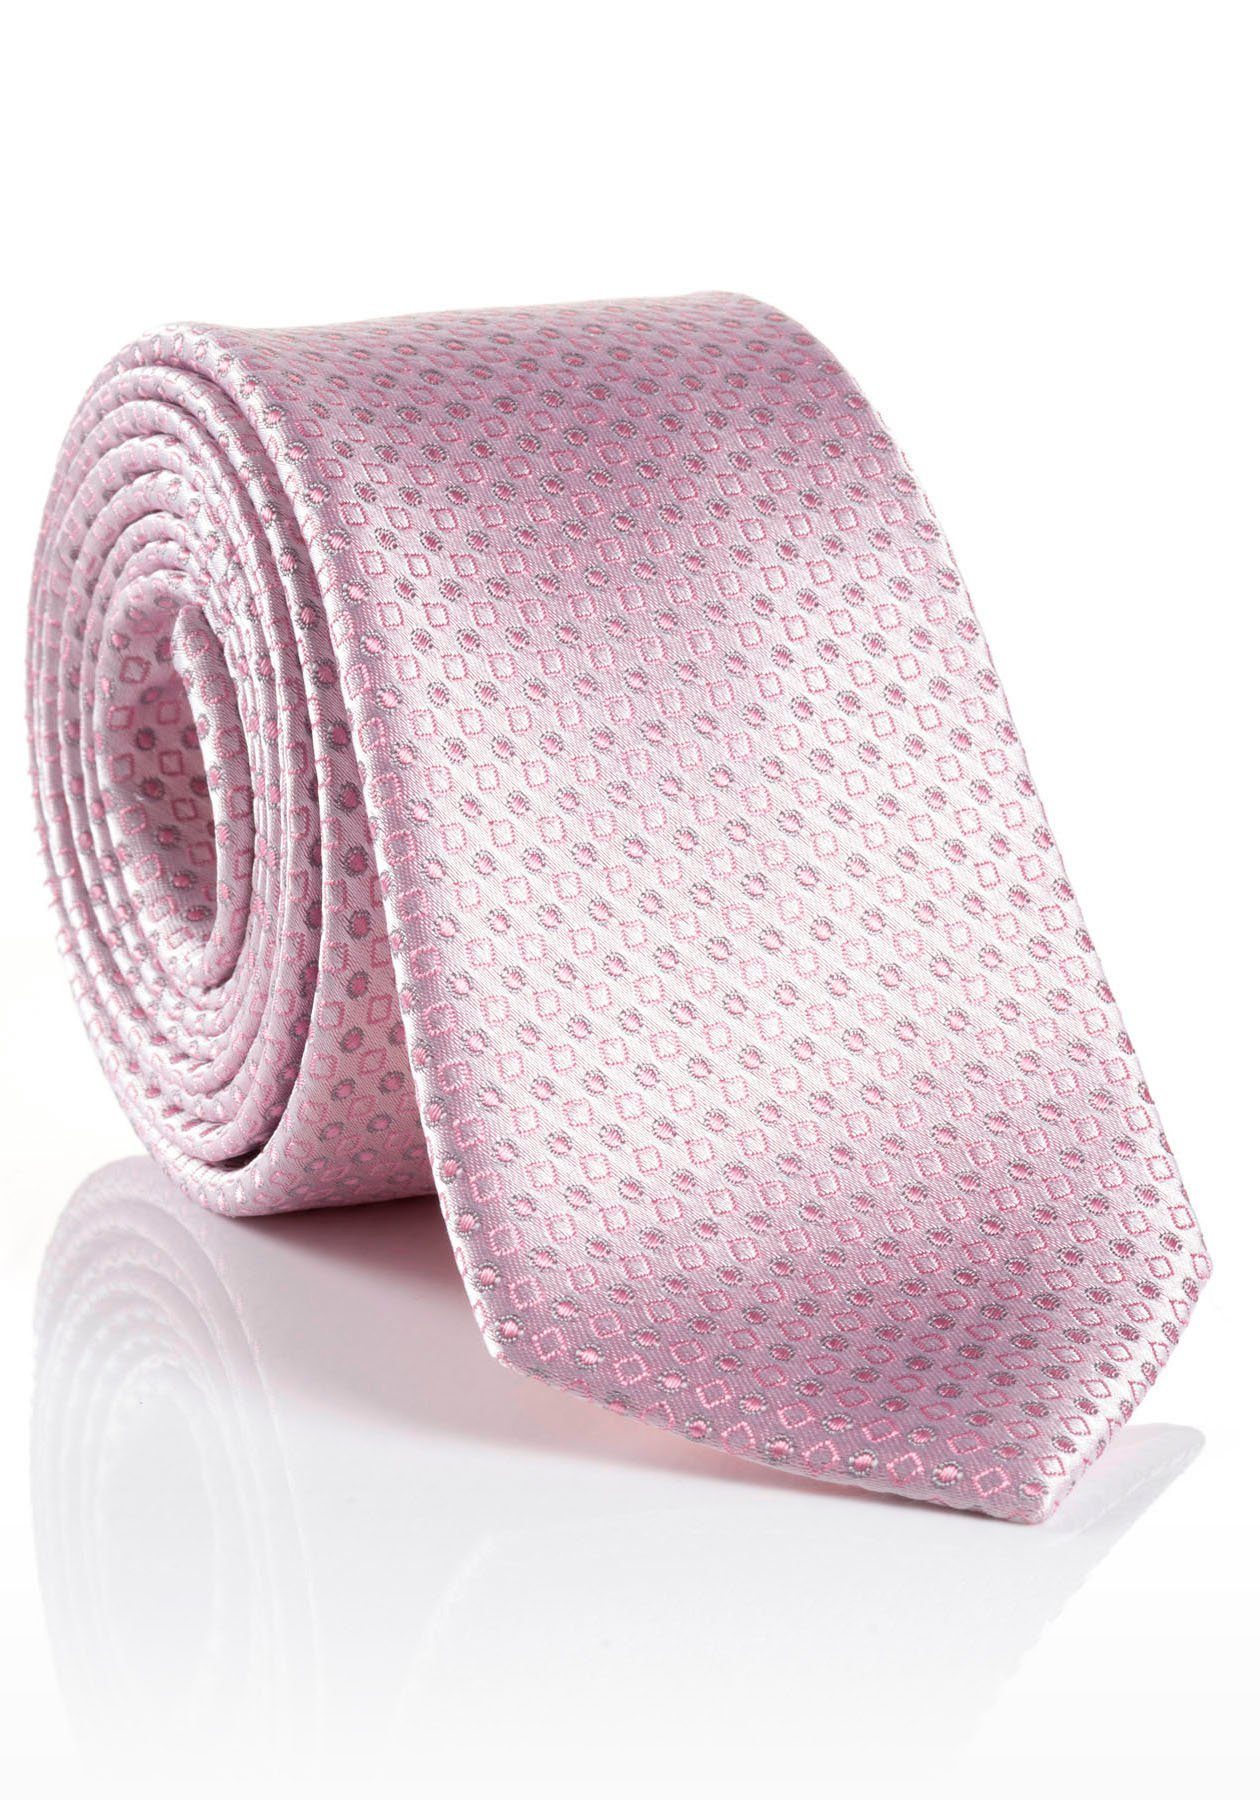 Krawatte MONTI LEANO Minimal-Design,Pastellfarben Krawatte aus reiner Seide,